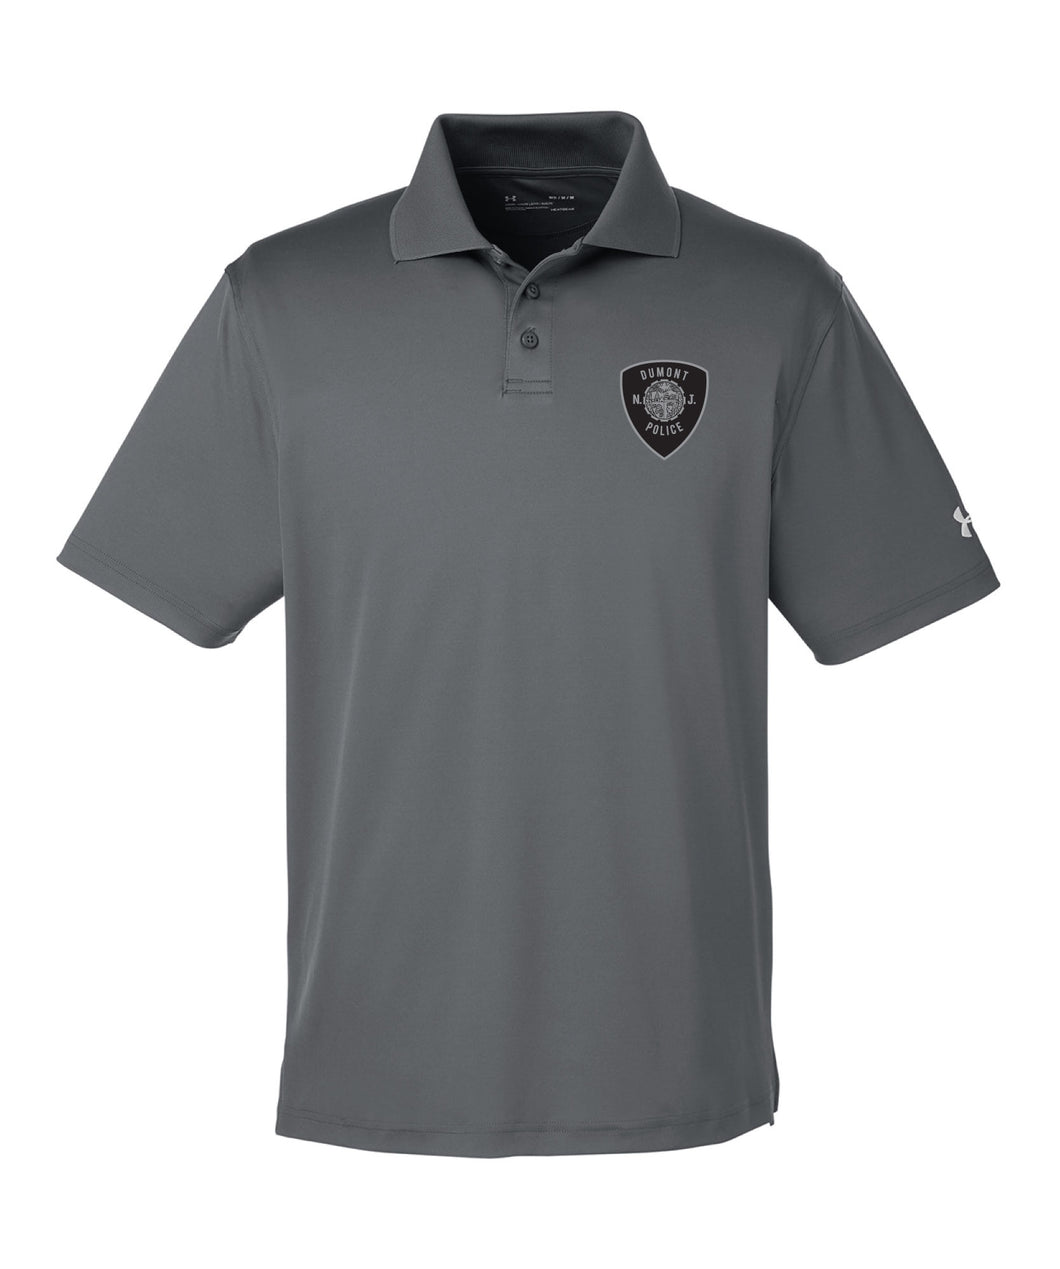 Dumont Police Under Armour Polo Shirt - Graphite (Design 3) - 5KounT